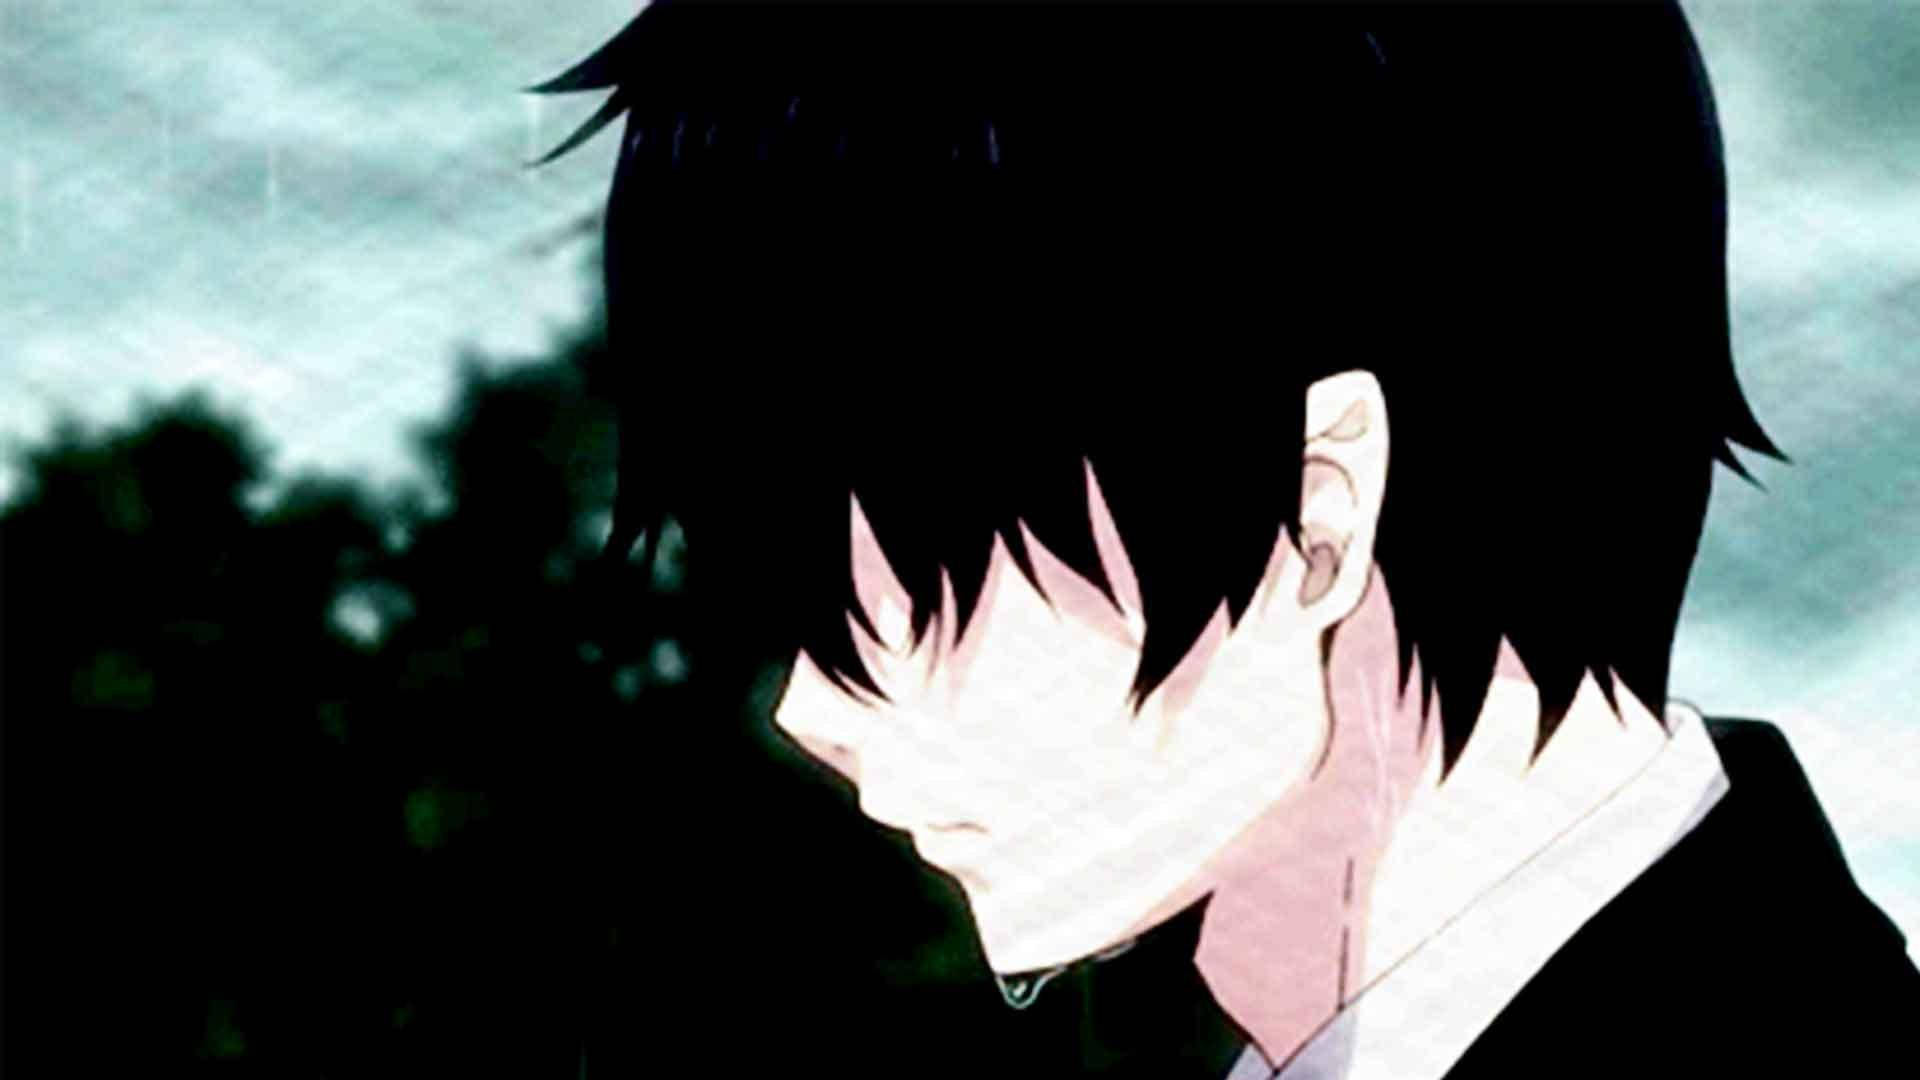 Sobbing Sad Anime Boy Background